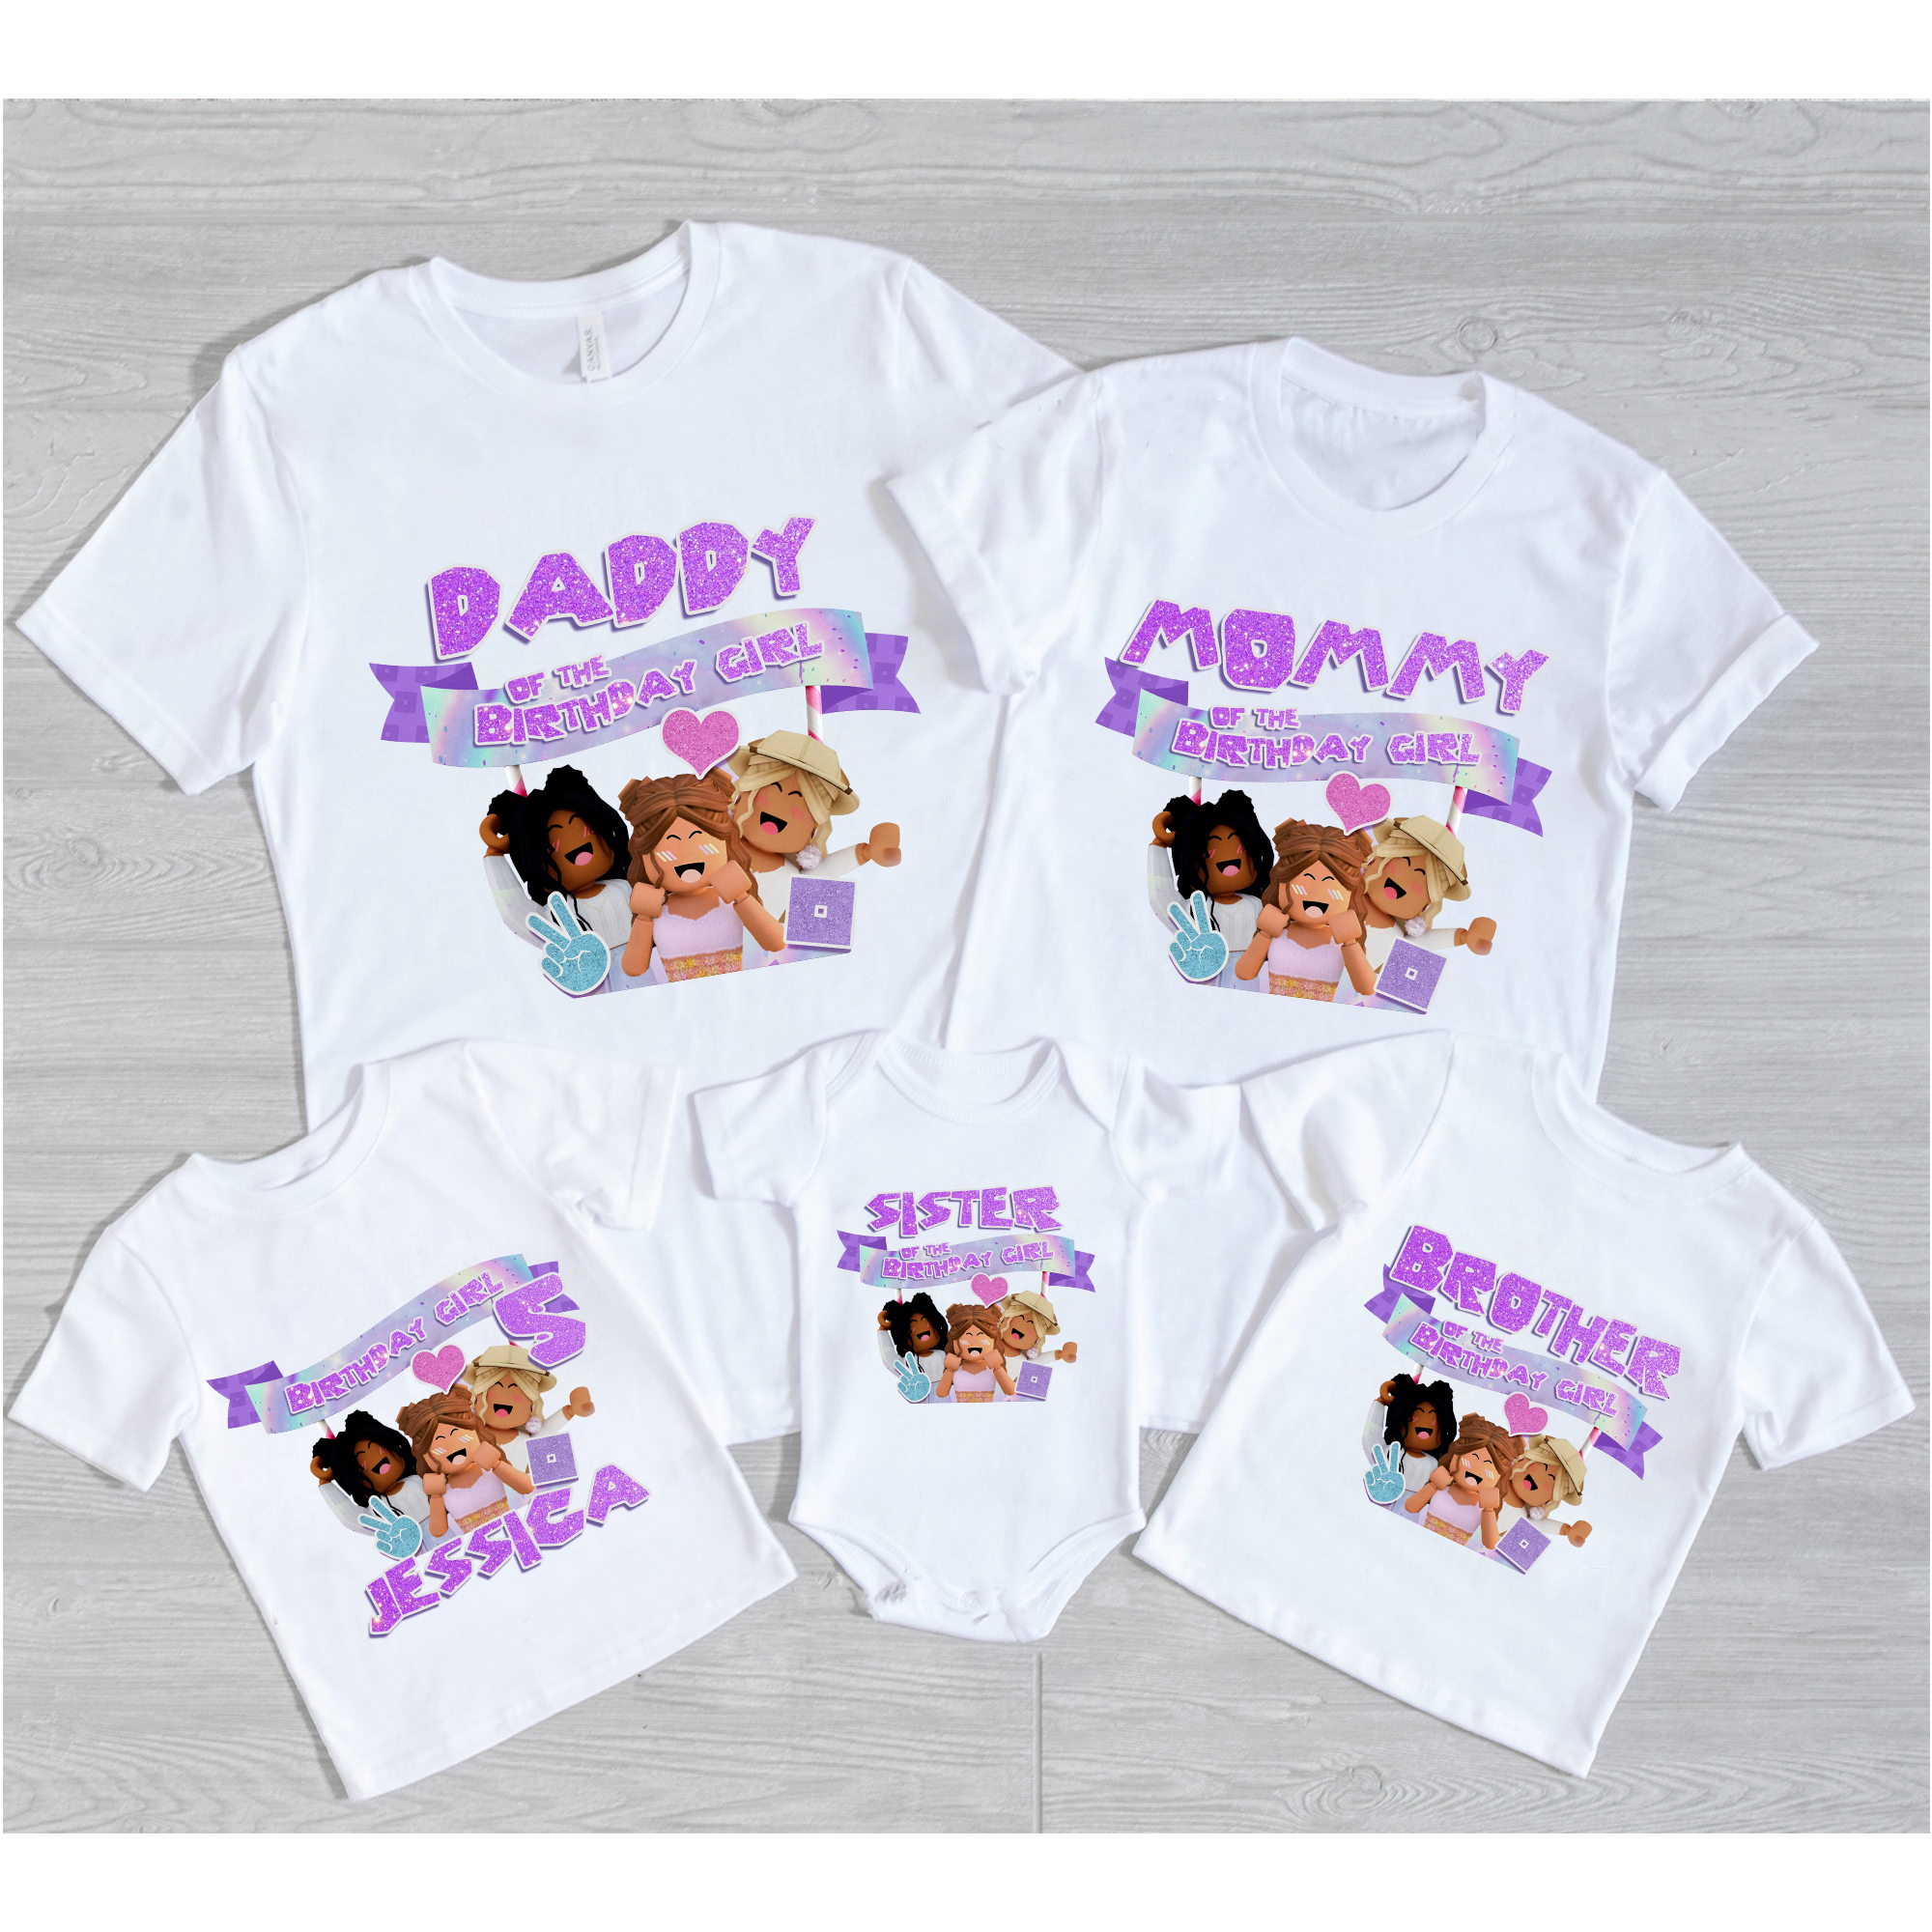 Roblox Girl Birthday Shirts, Family Set Roblox shirts, Roblox birthday theme shirts, Roblox birthday, Roblox shirt, Roblox tshirt, Roblox Girl